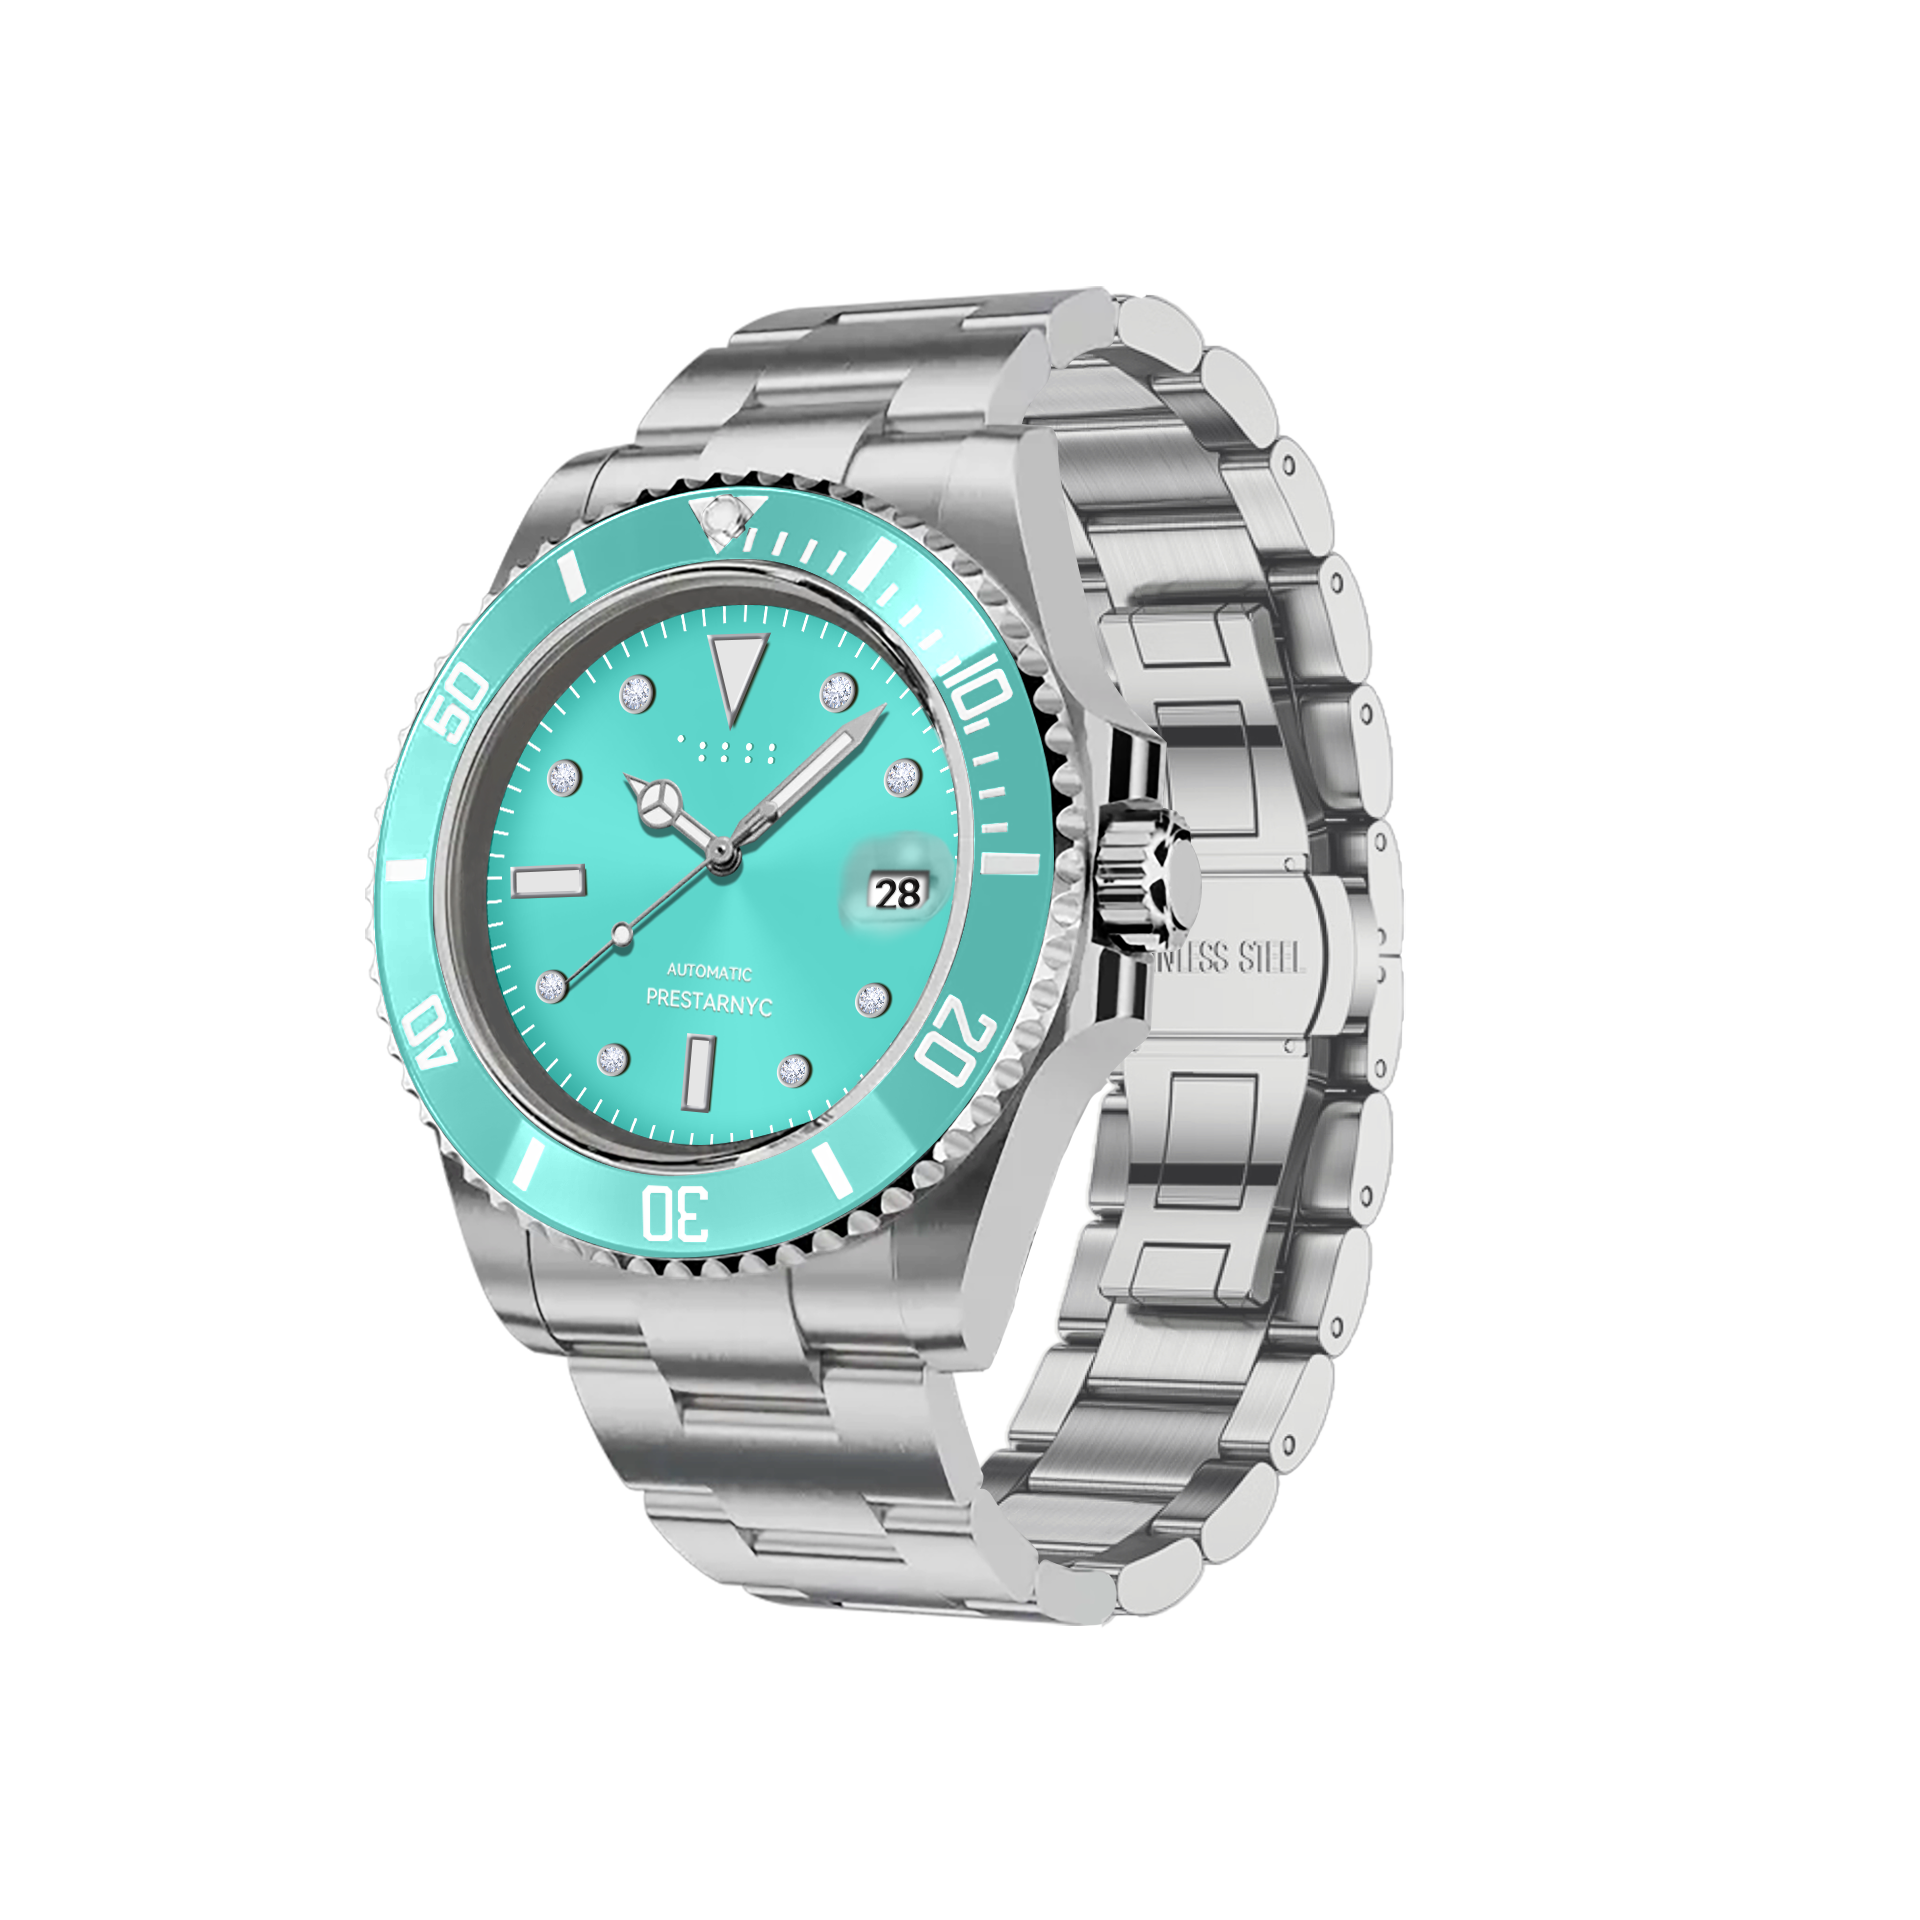 Prestar NYC Aquaman Classic Diamond Watch (Blue Turquoise)